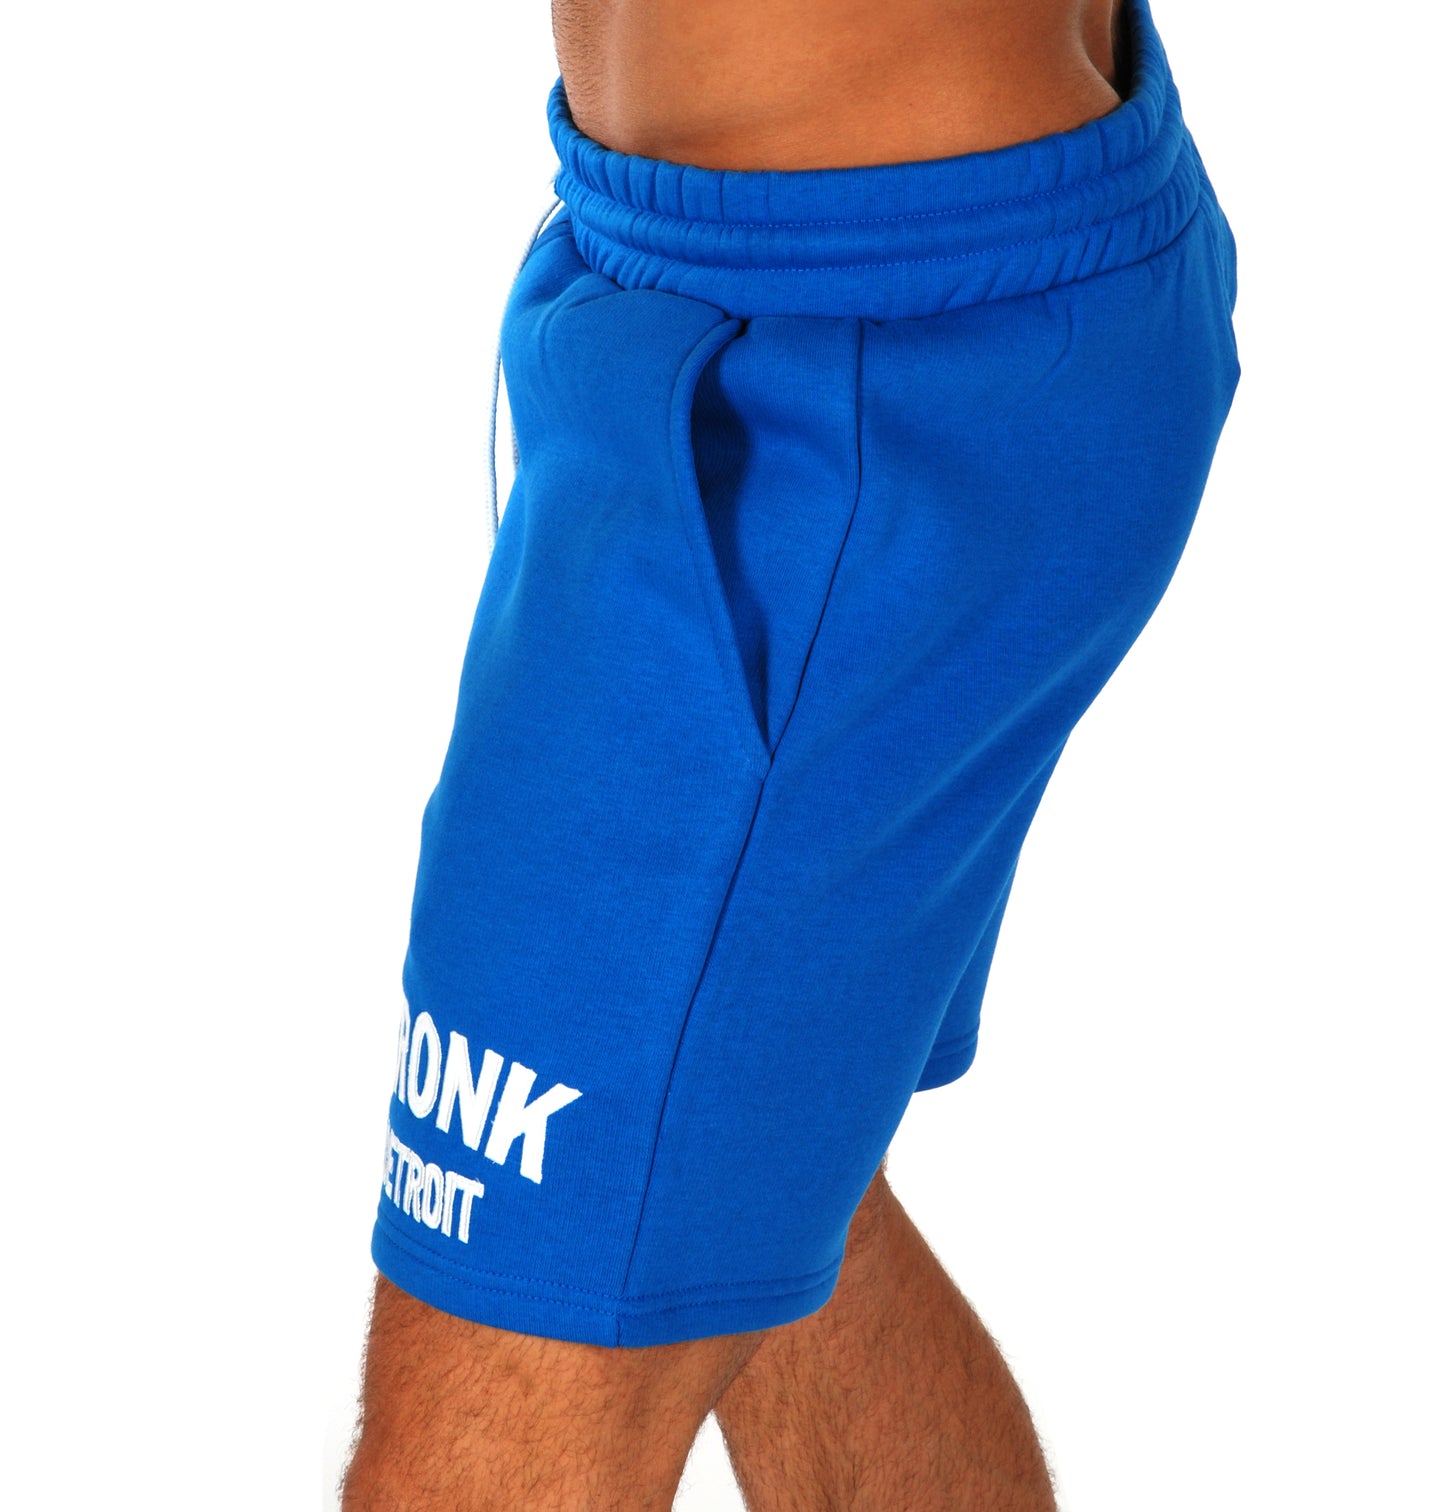 KRONK Detroit Jog Shorts Royal Blue with White Applique logo